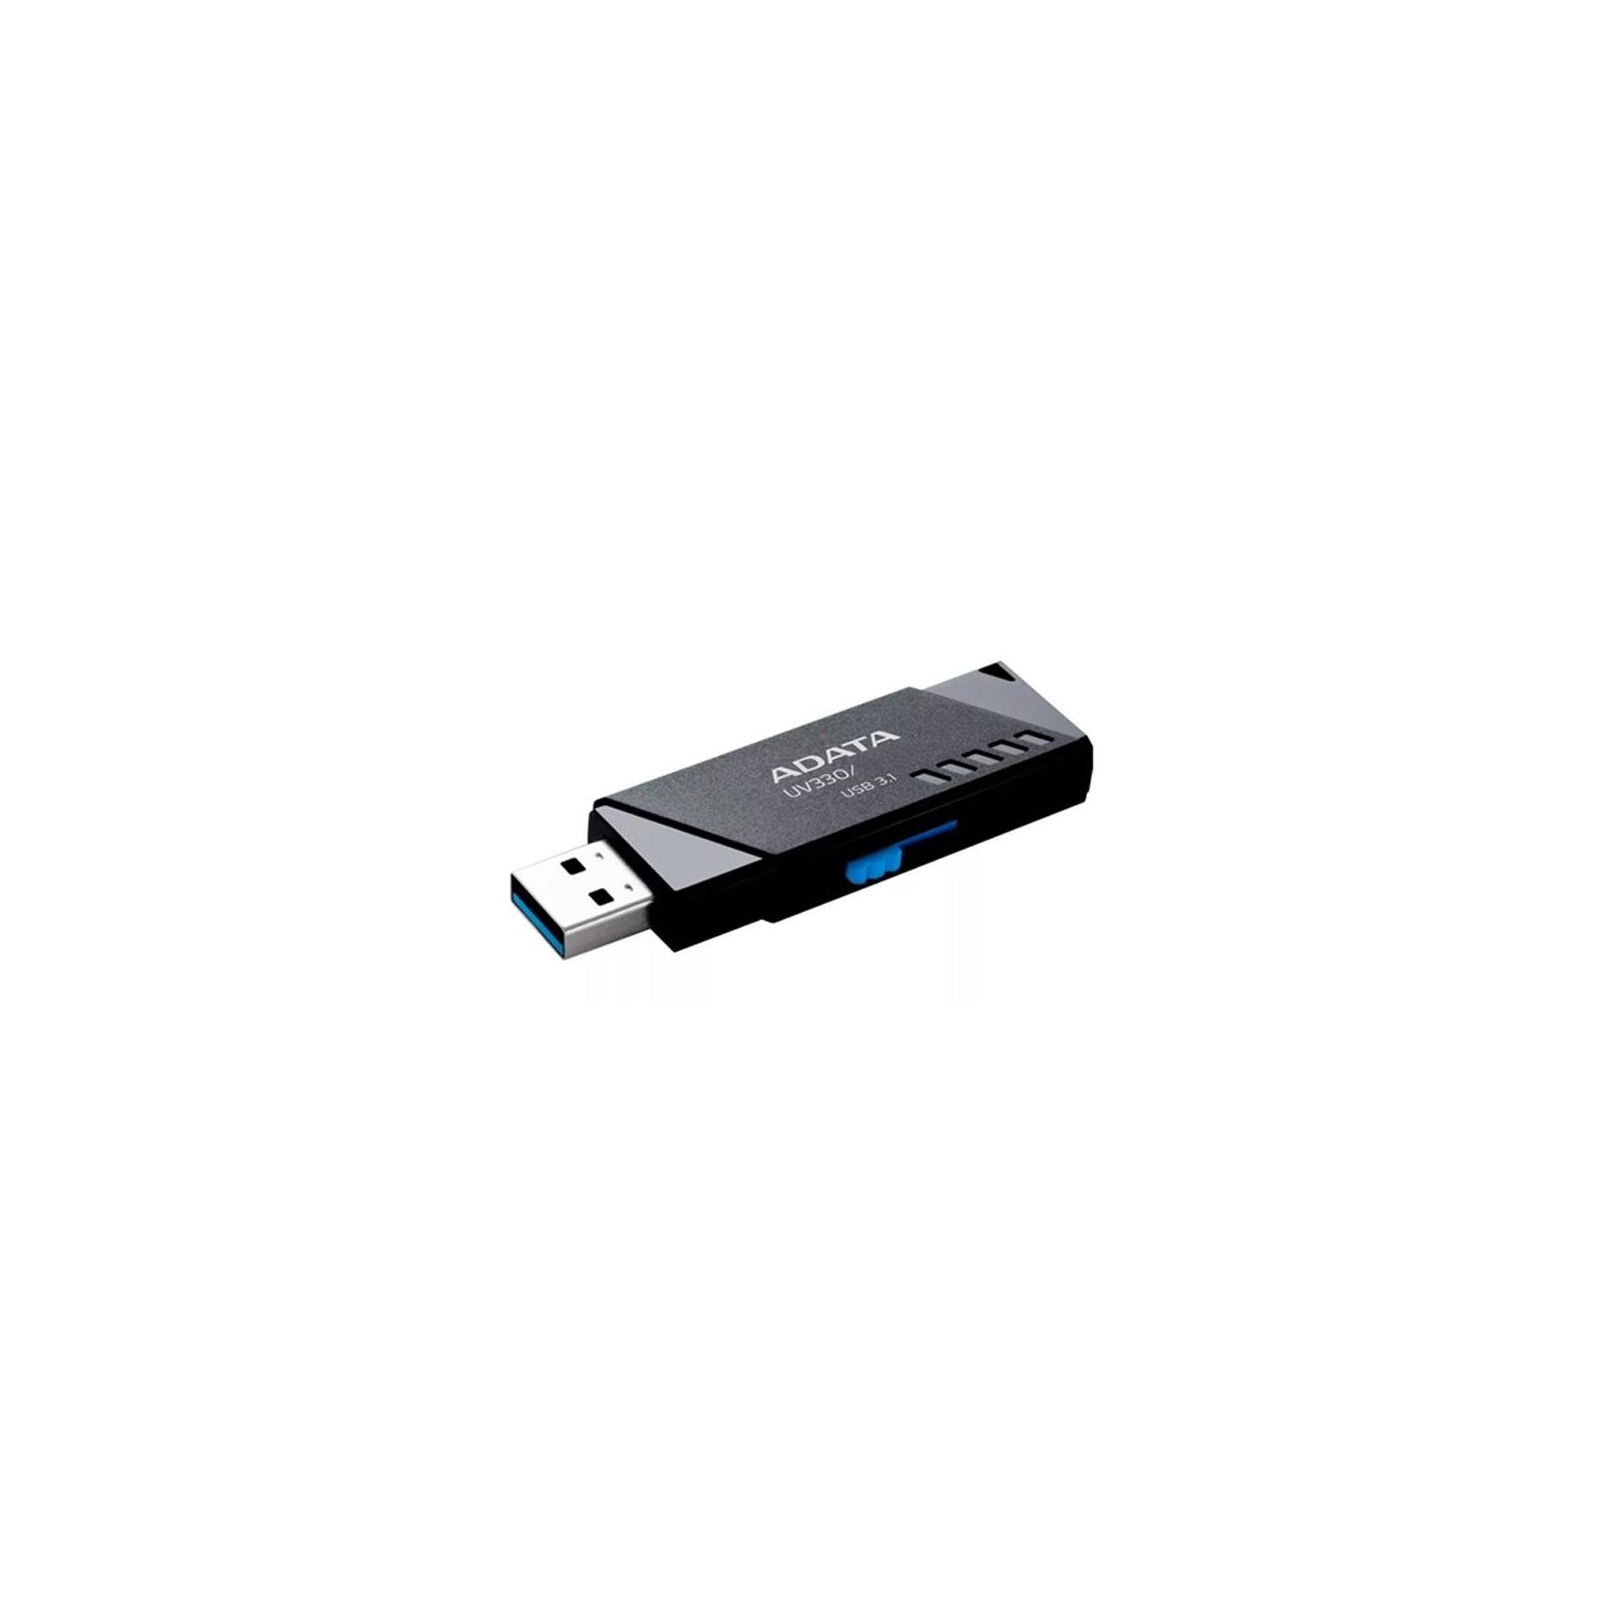 USB флеш накопитель ADATA 16GB UV330 Black USB 3.1 (AUV330-16G-RBK) изображение 3